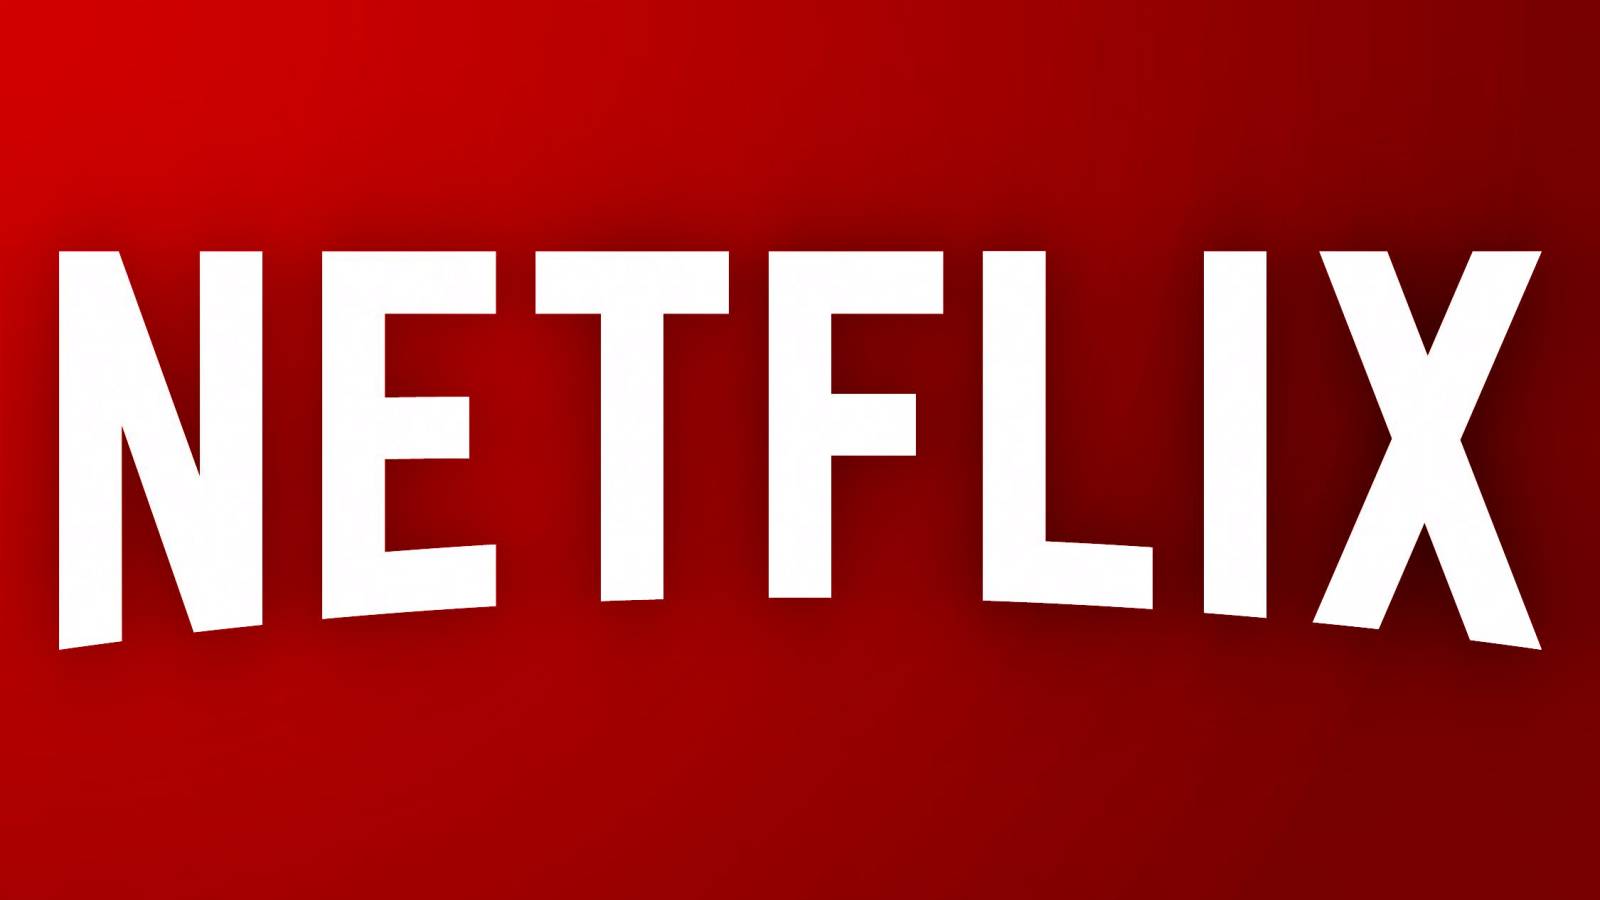 Netflix 2 PREMIERE IMPORTANTE Anuntate Oficial Abonati